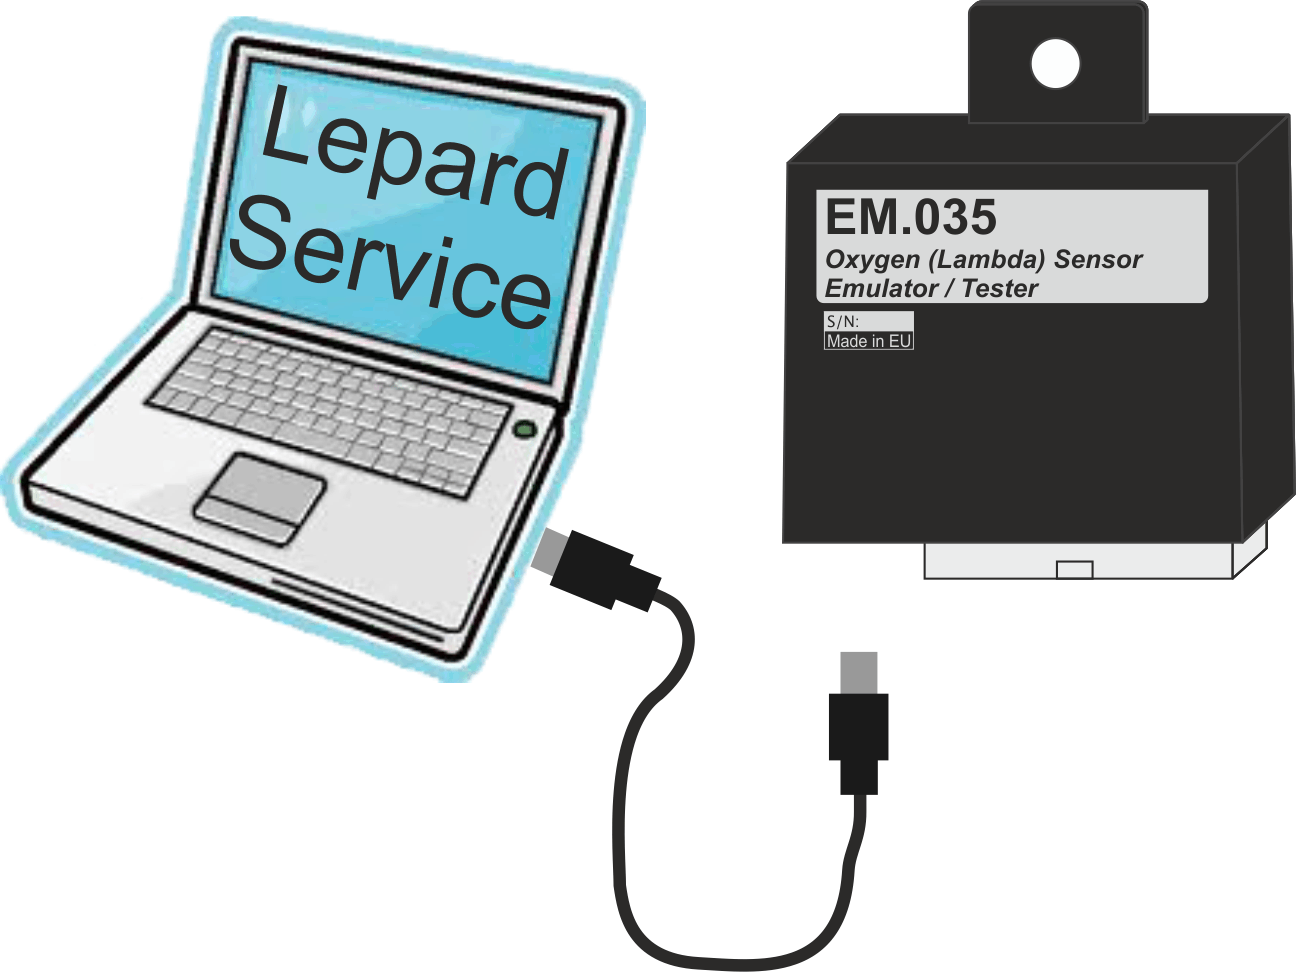 E Configuration of Emulator using the LepardService